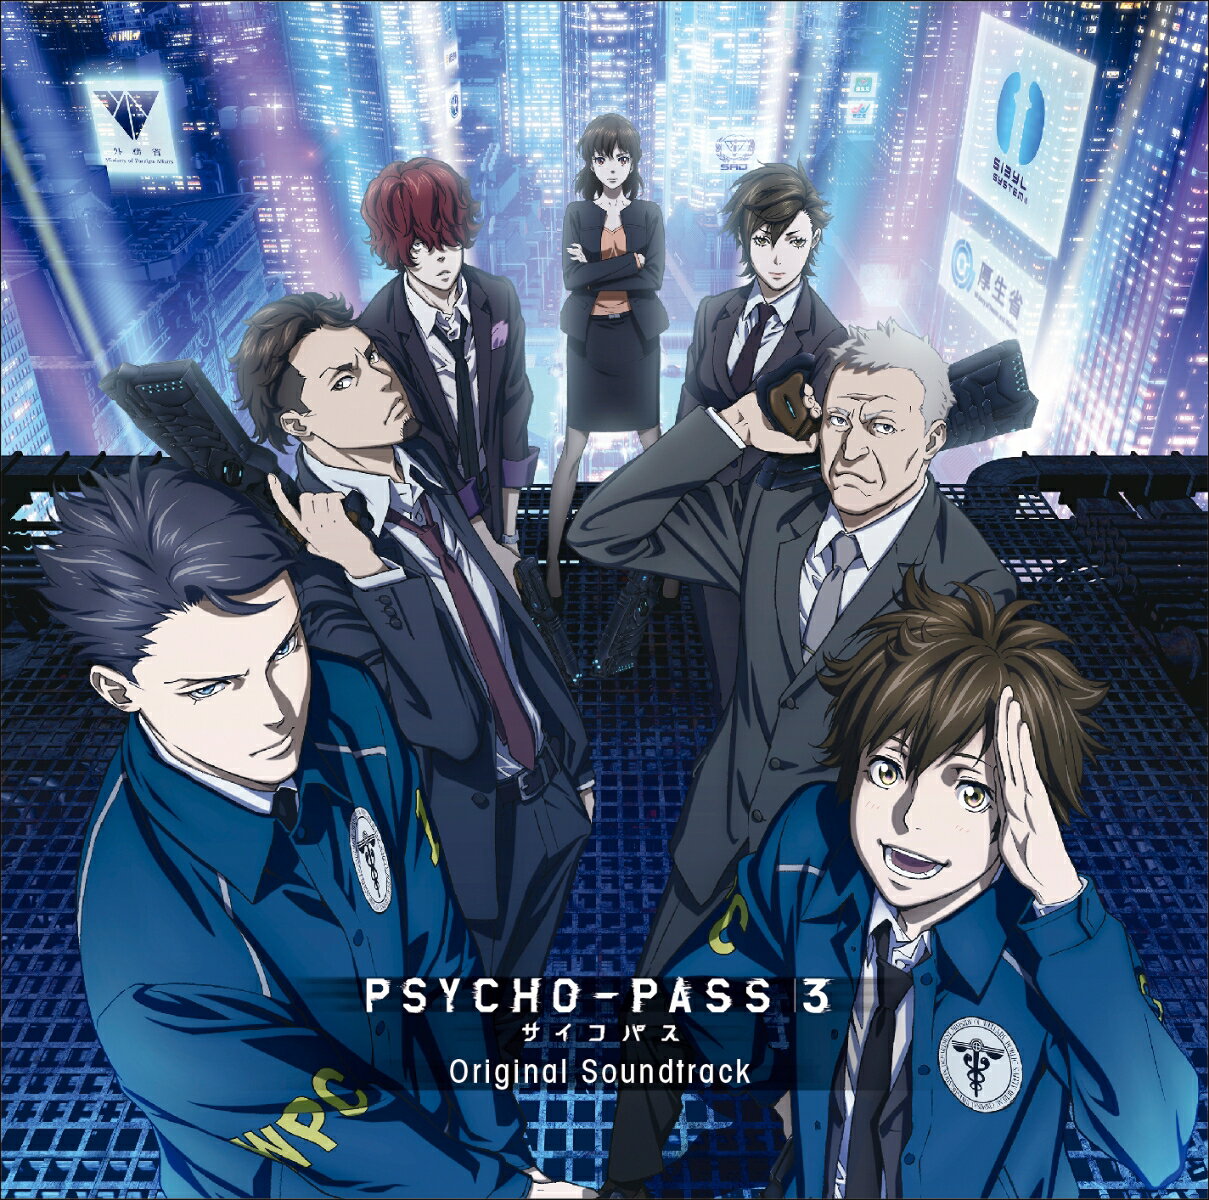 「PSYCHO-PASS サイコパス 3」 Original Soundtrack (通常盤 2CD)